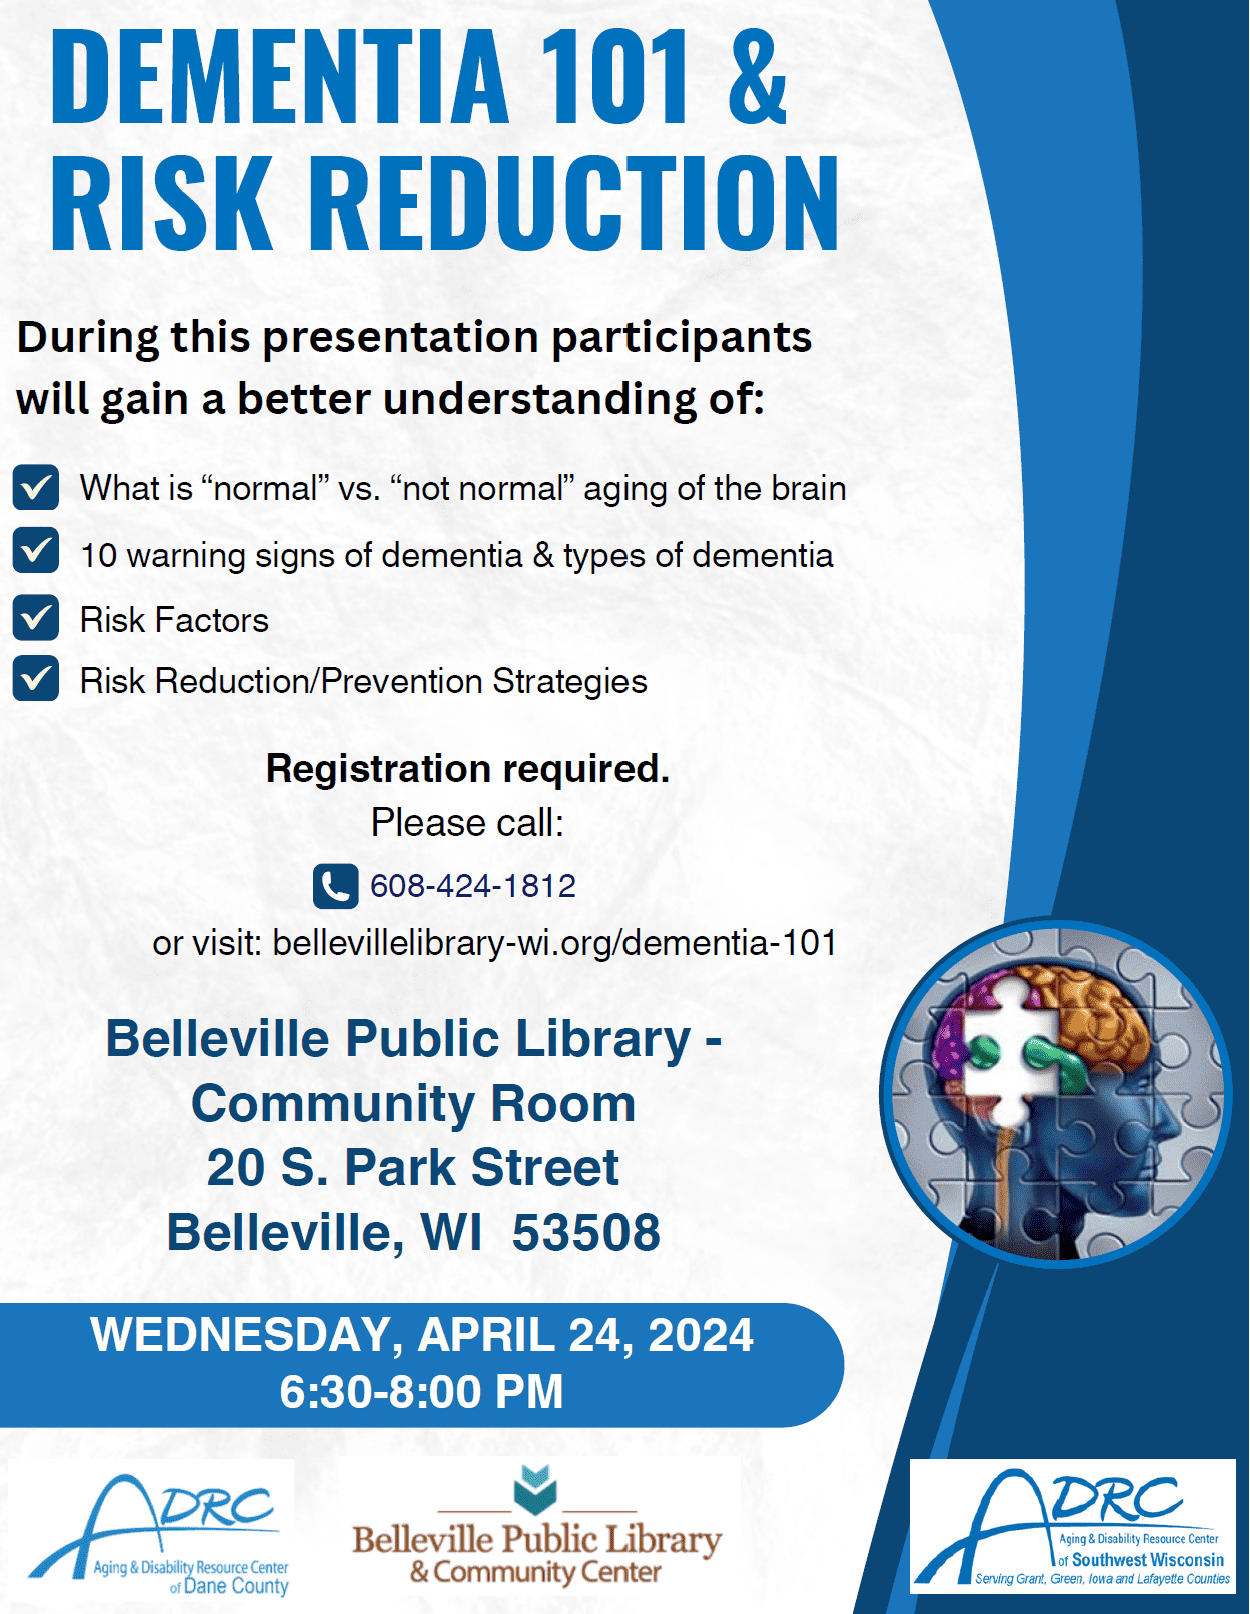 Dementia 101 & Risk Reduction @ Belleville Public Library - Community Room